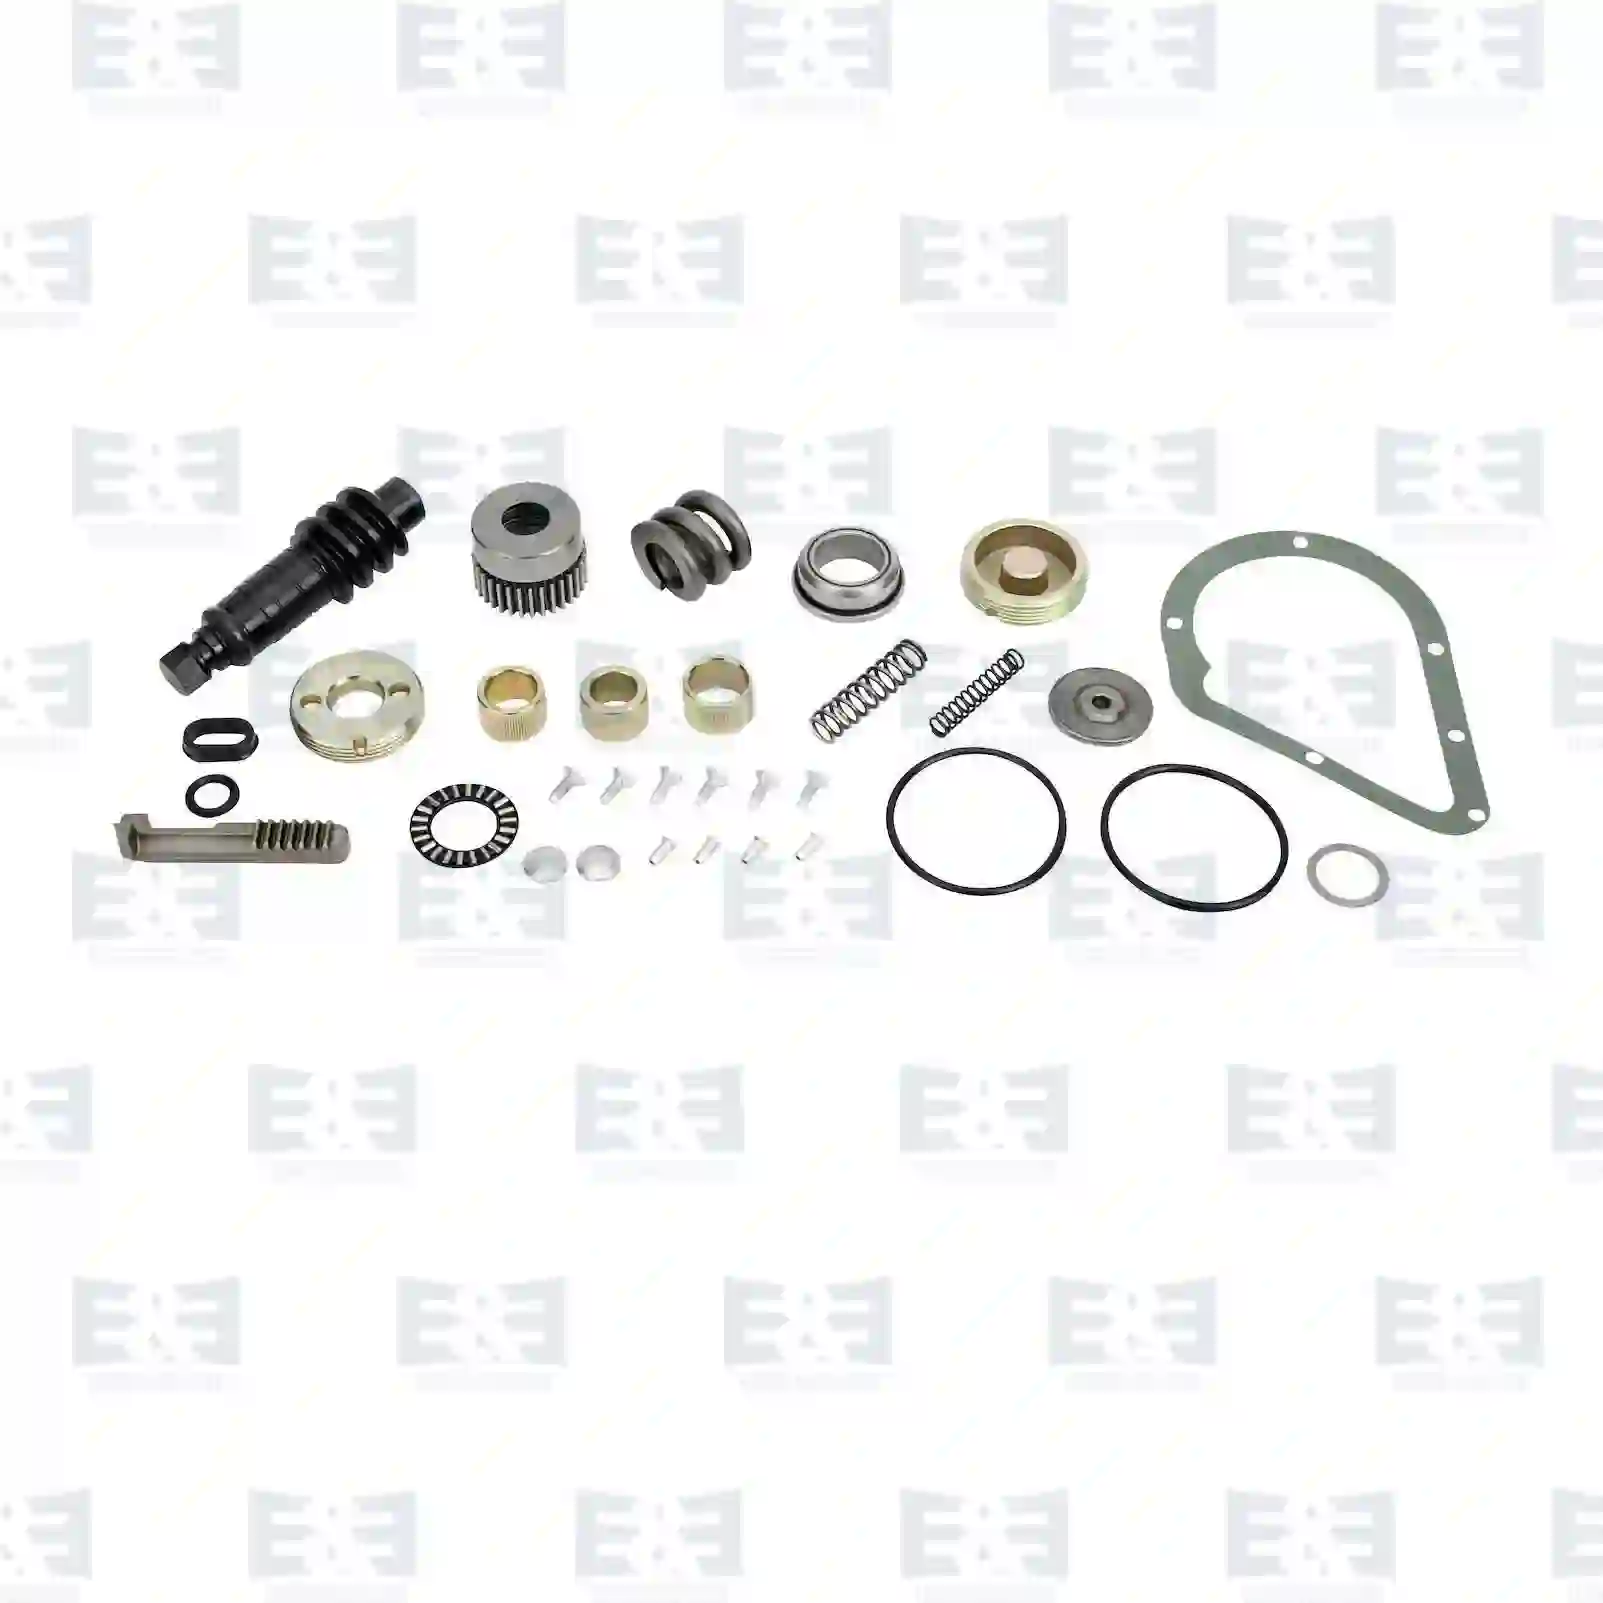 Slack adjuster kit, 2E2297477, 0871392, 871392, 81506106132, 81506120001, 0004200092, 0025861142, 5001825536, 1350817, 324729, 3091286 ||  2E2297477 E&E Truck Spare Parts | Truck Spare Parts, Auotomotive Spare Parts Slack adjuster kit, 2E2297477, 0871392, 871392, 81506106132, 81506120001, 0004200092, 0025861142, 5001825536, 1350817, 324729, 3091286 ||  2E2297477 E&E Truck Spare Parts | Truck Spare Parts, Auotomotive Spare Parts